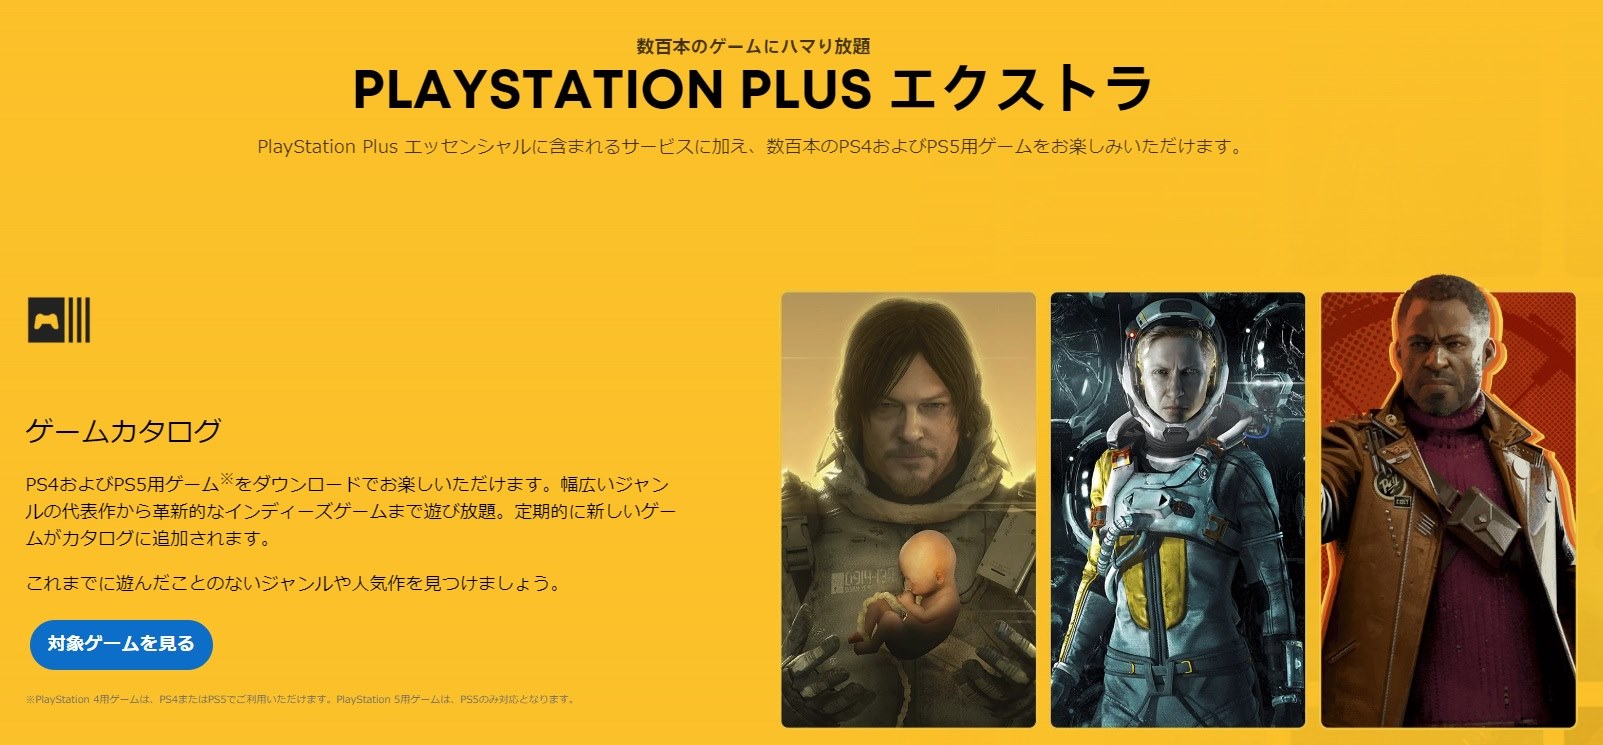 PS Plus12ヶ月利用券、未加入者向けに「2600円引き」限定セール中